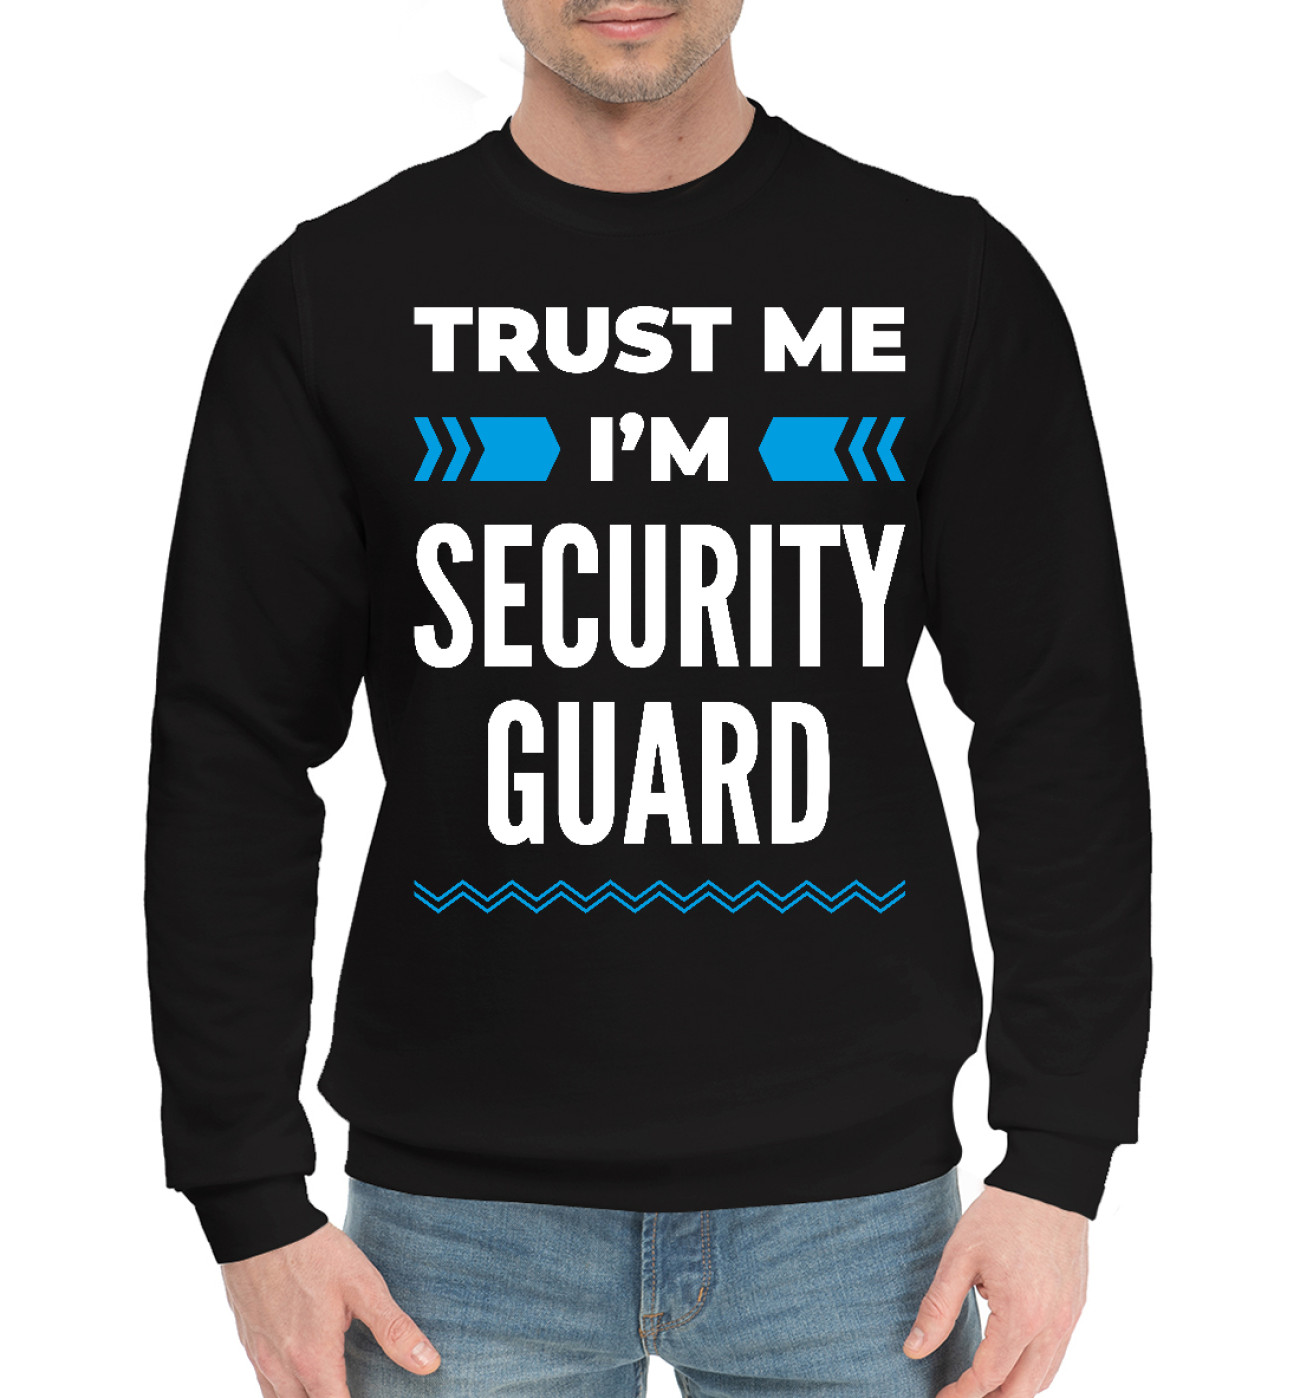 Мужской Хлопковый свитшот Trust me I'm Security guard, артикул: OHR-269040-hsw-2